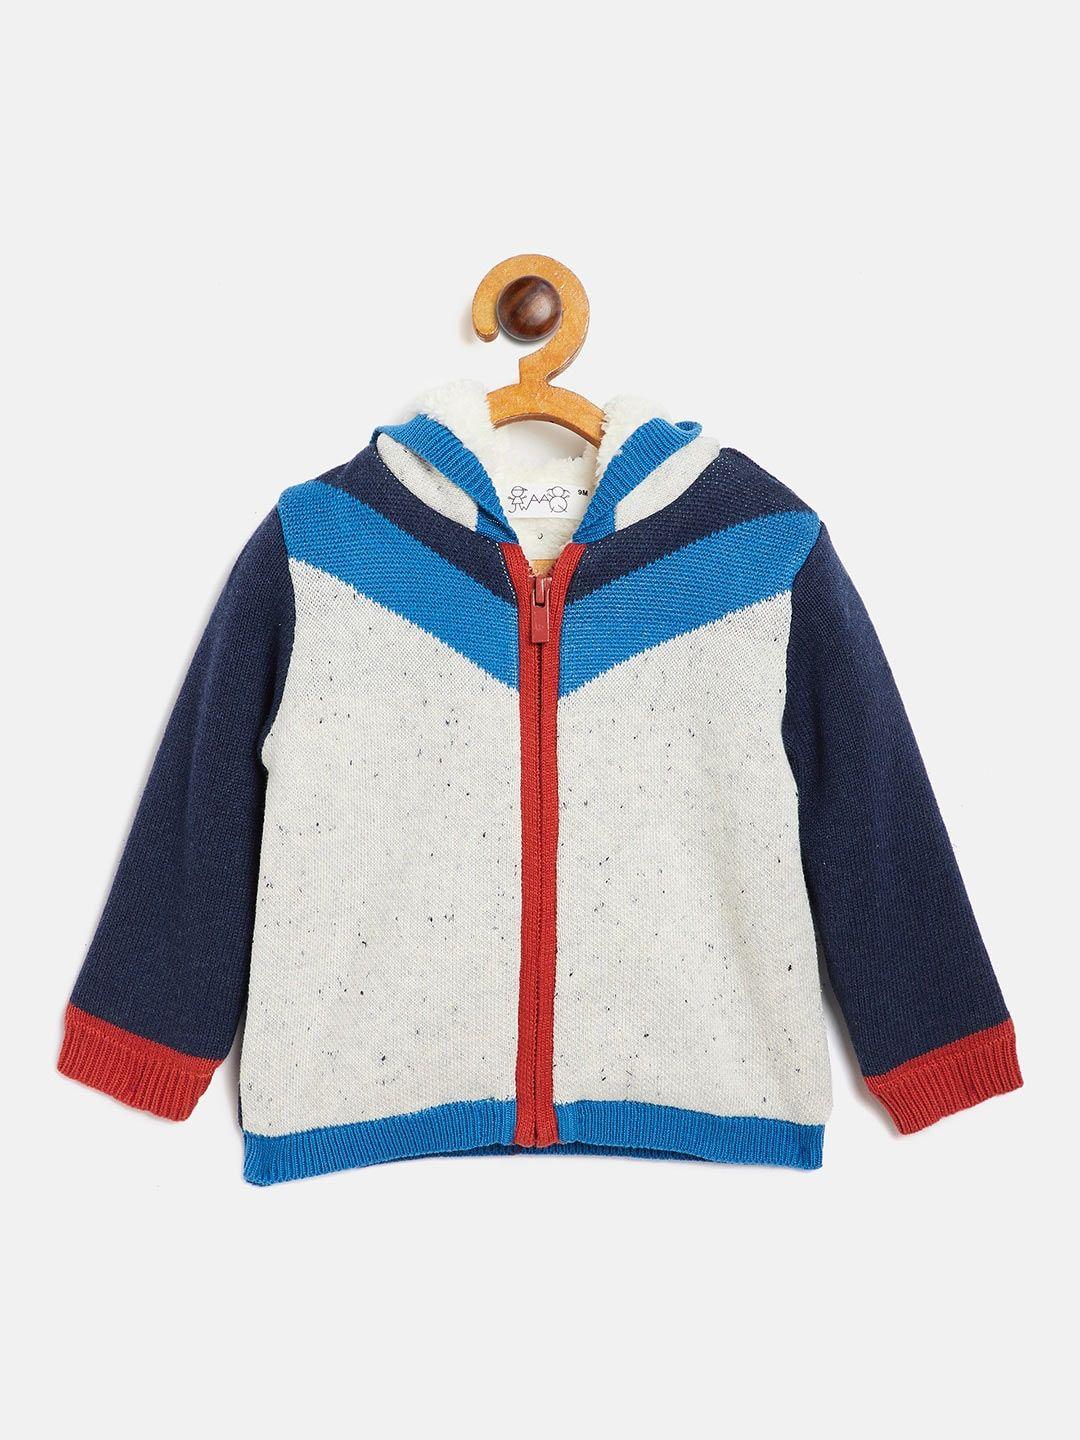 wildlinggs-infants-colourblocked-hooded-cardigan-sweater